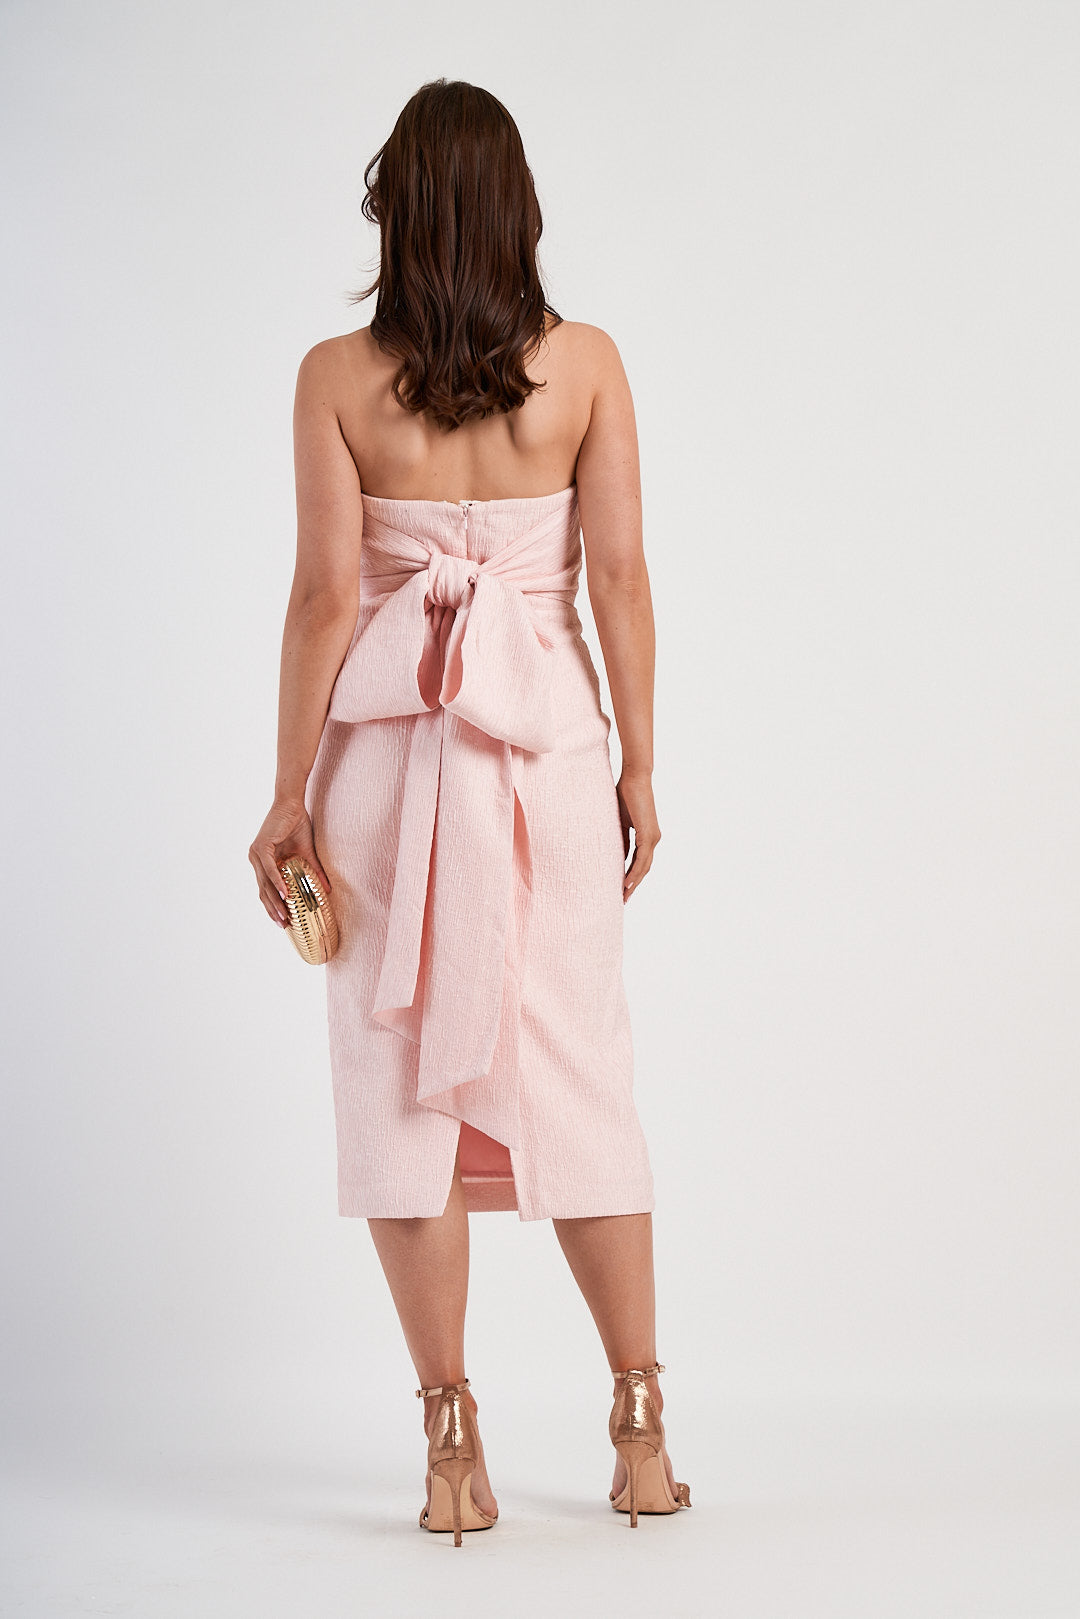 Rebecca Vallance Pink Harlow Dress